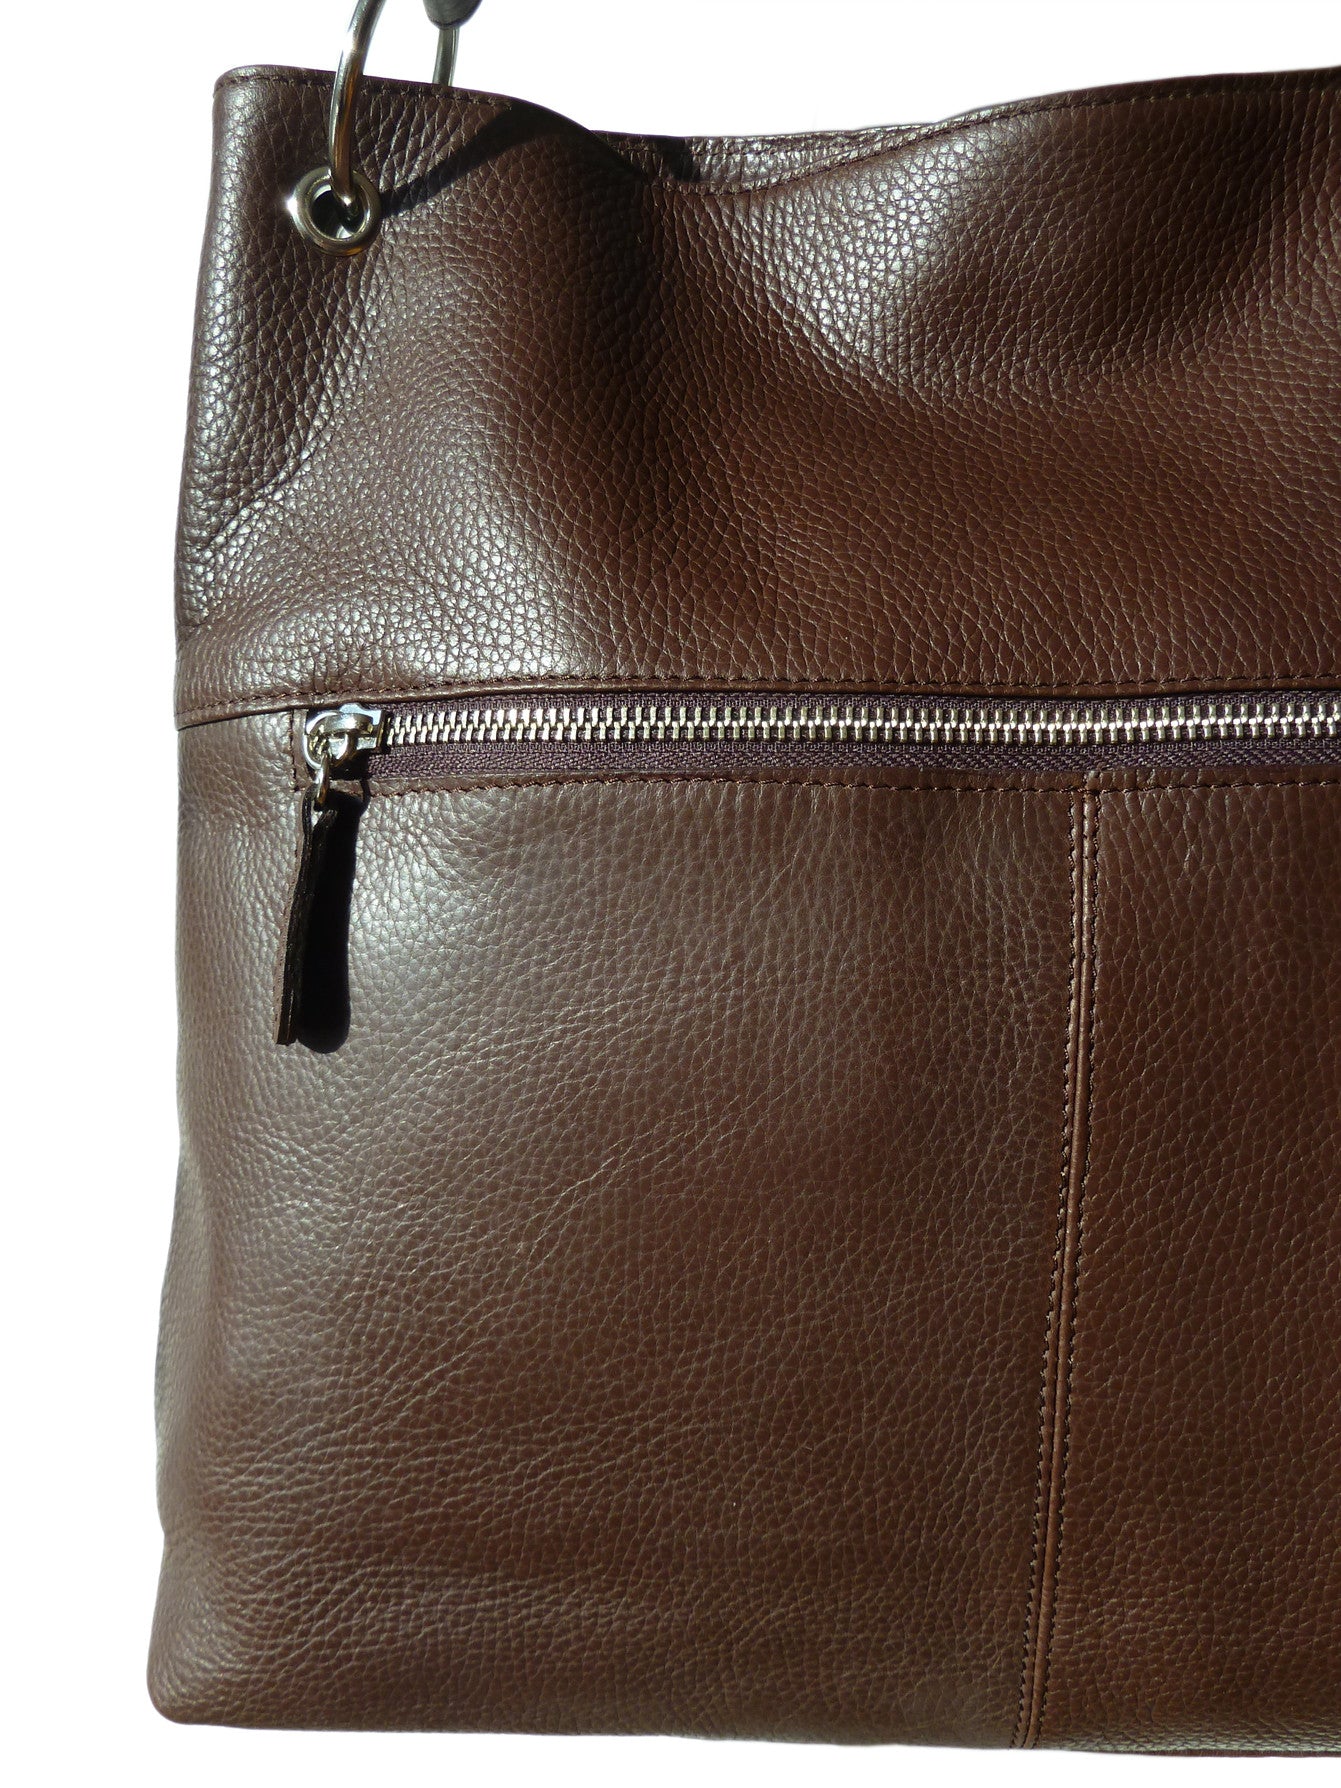 Gapock X Crossbody Bag Pebble Grain Leather Black